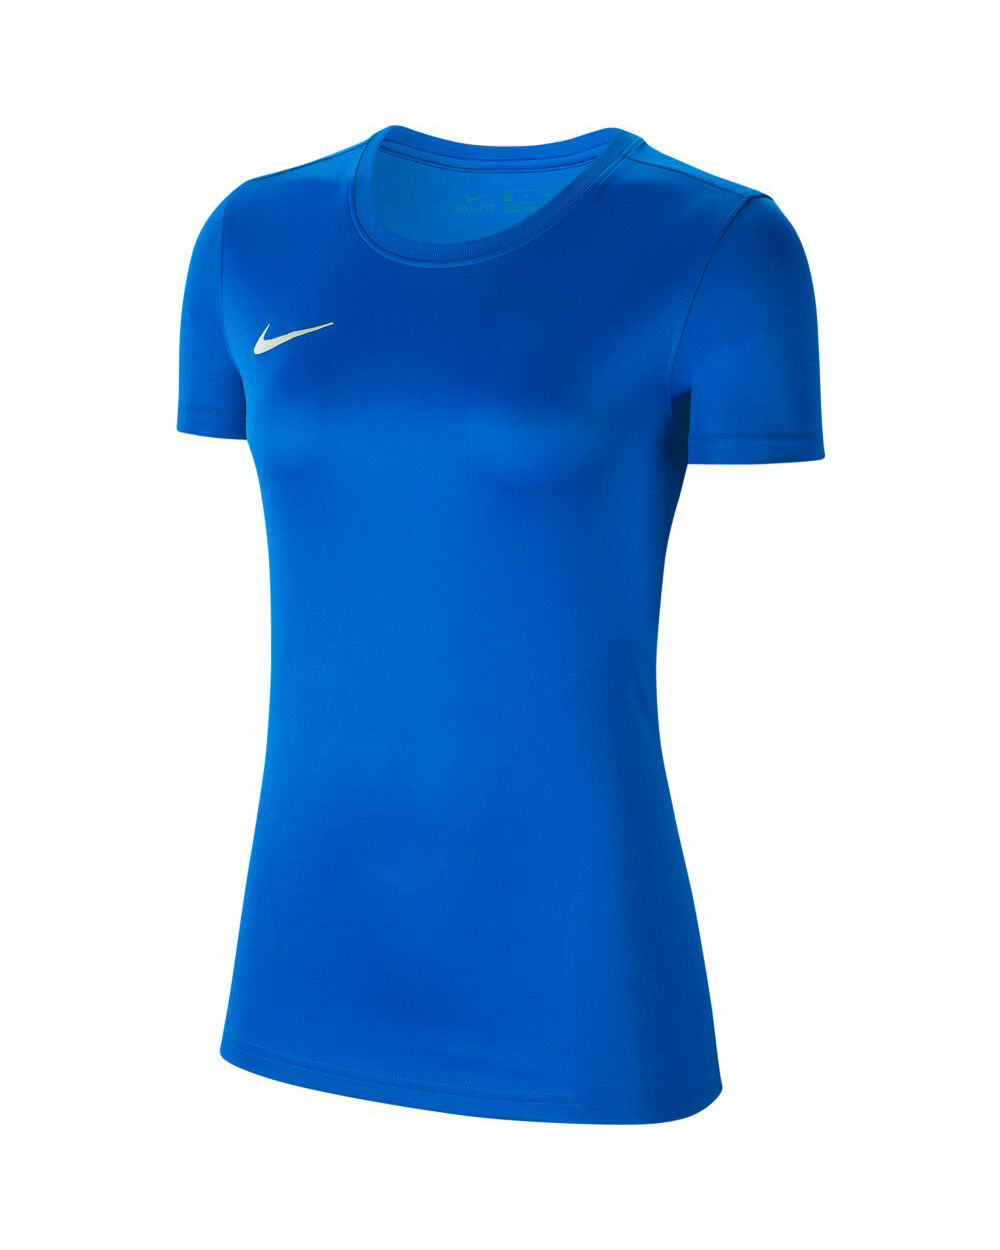 Camiseta Nike Park VII Azul Real para Mujeres - BV6728-463